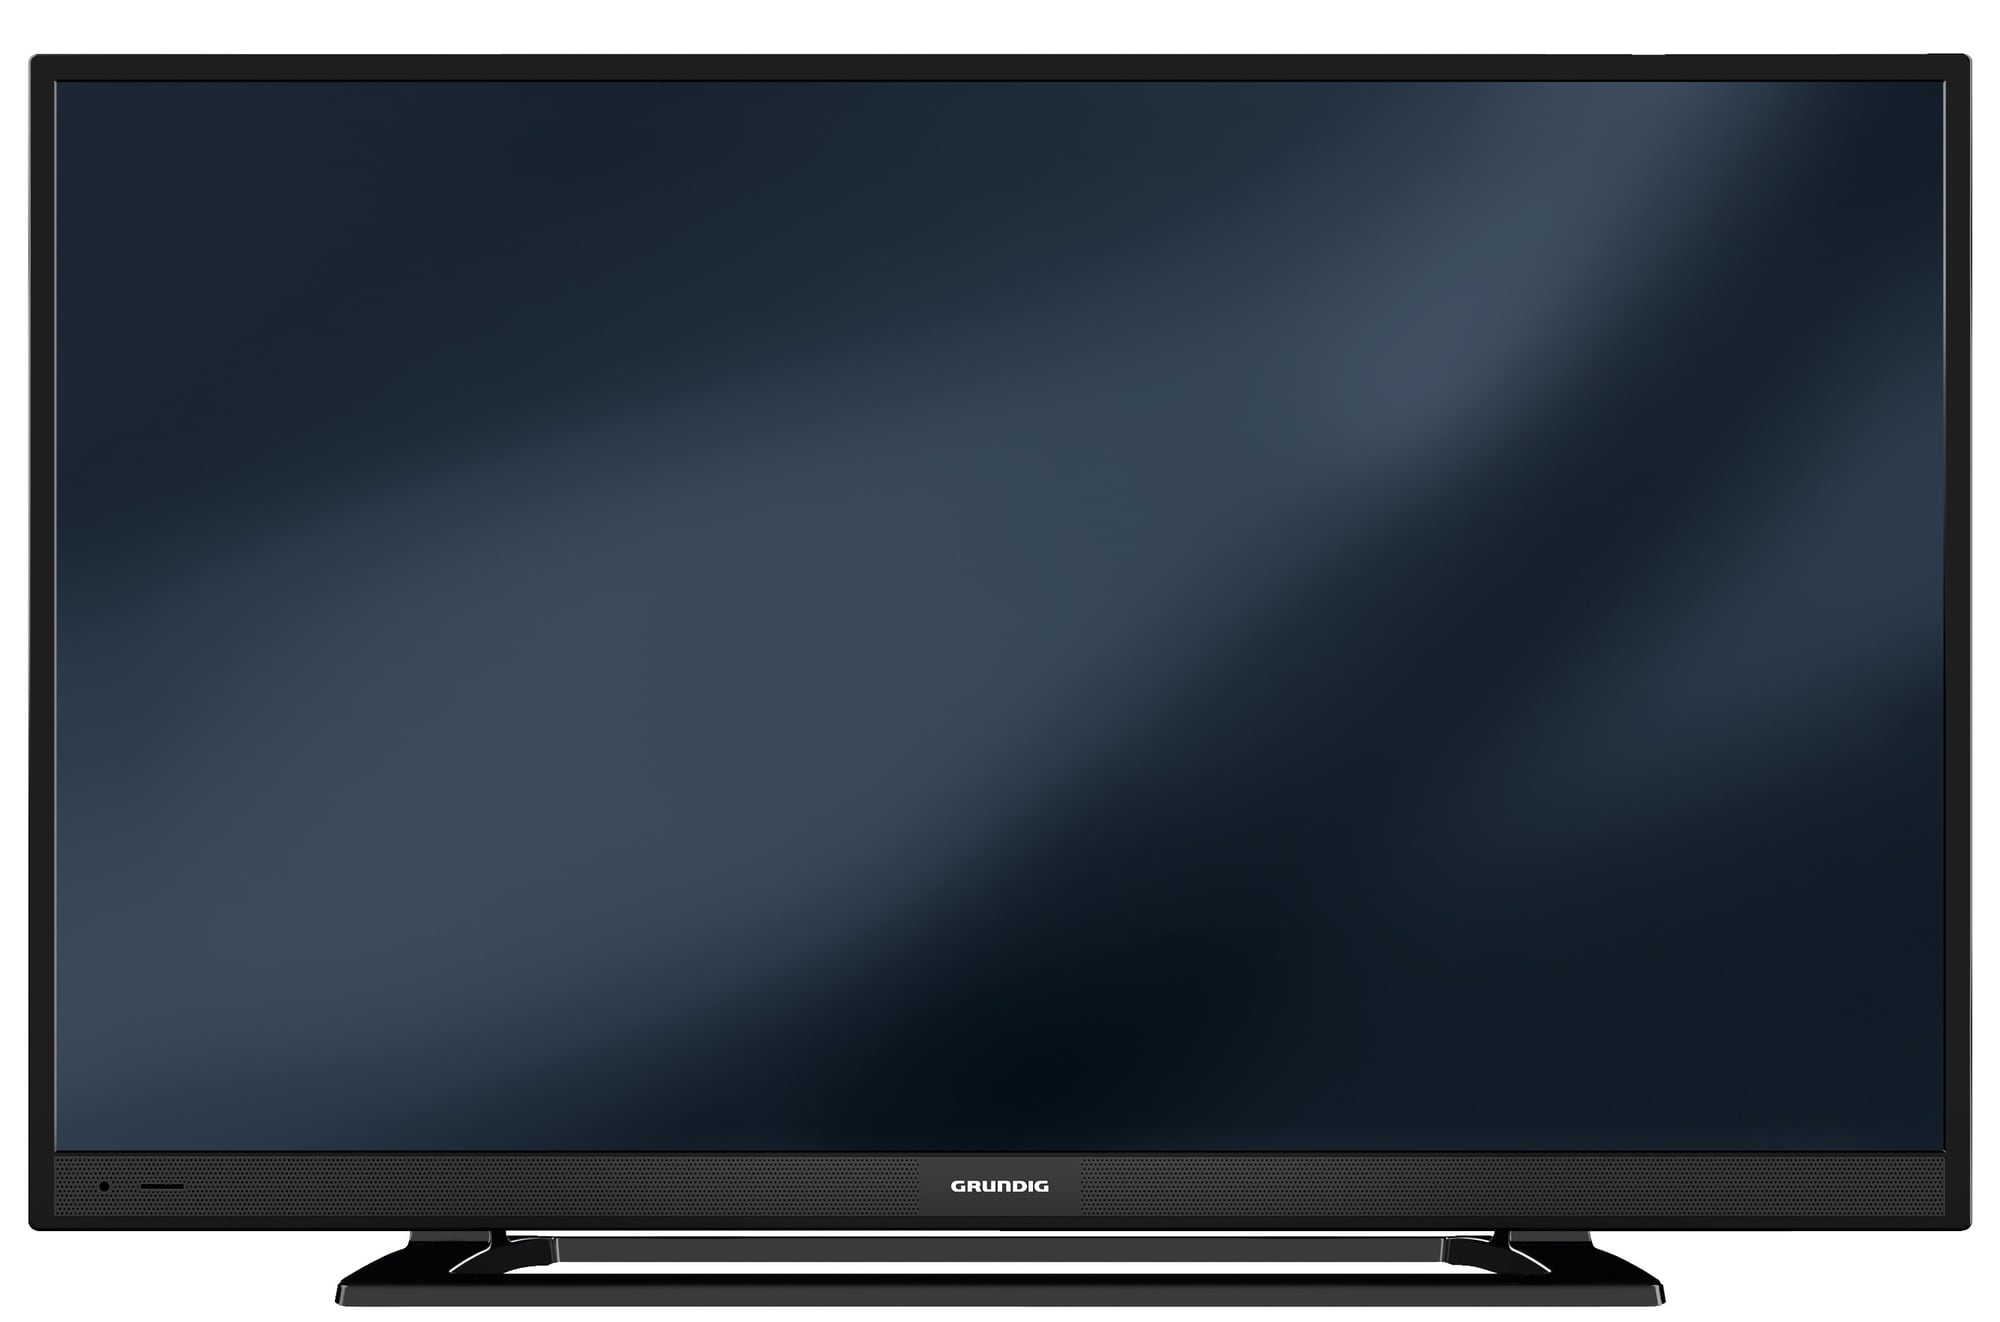 Grundig 22" LED-TV 22 VLE 5520 BN | Elgiganten